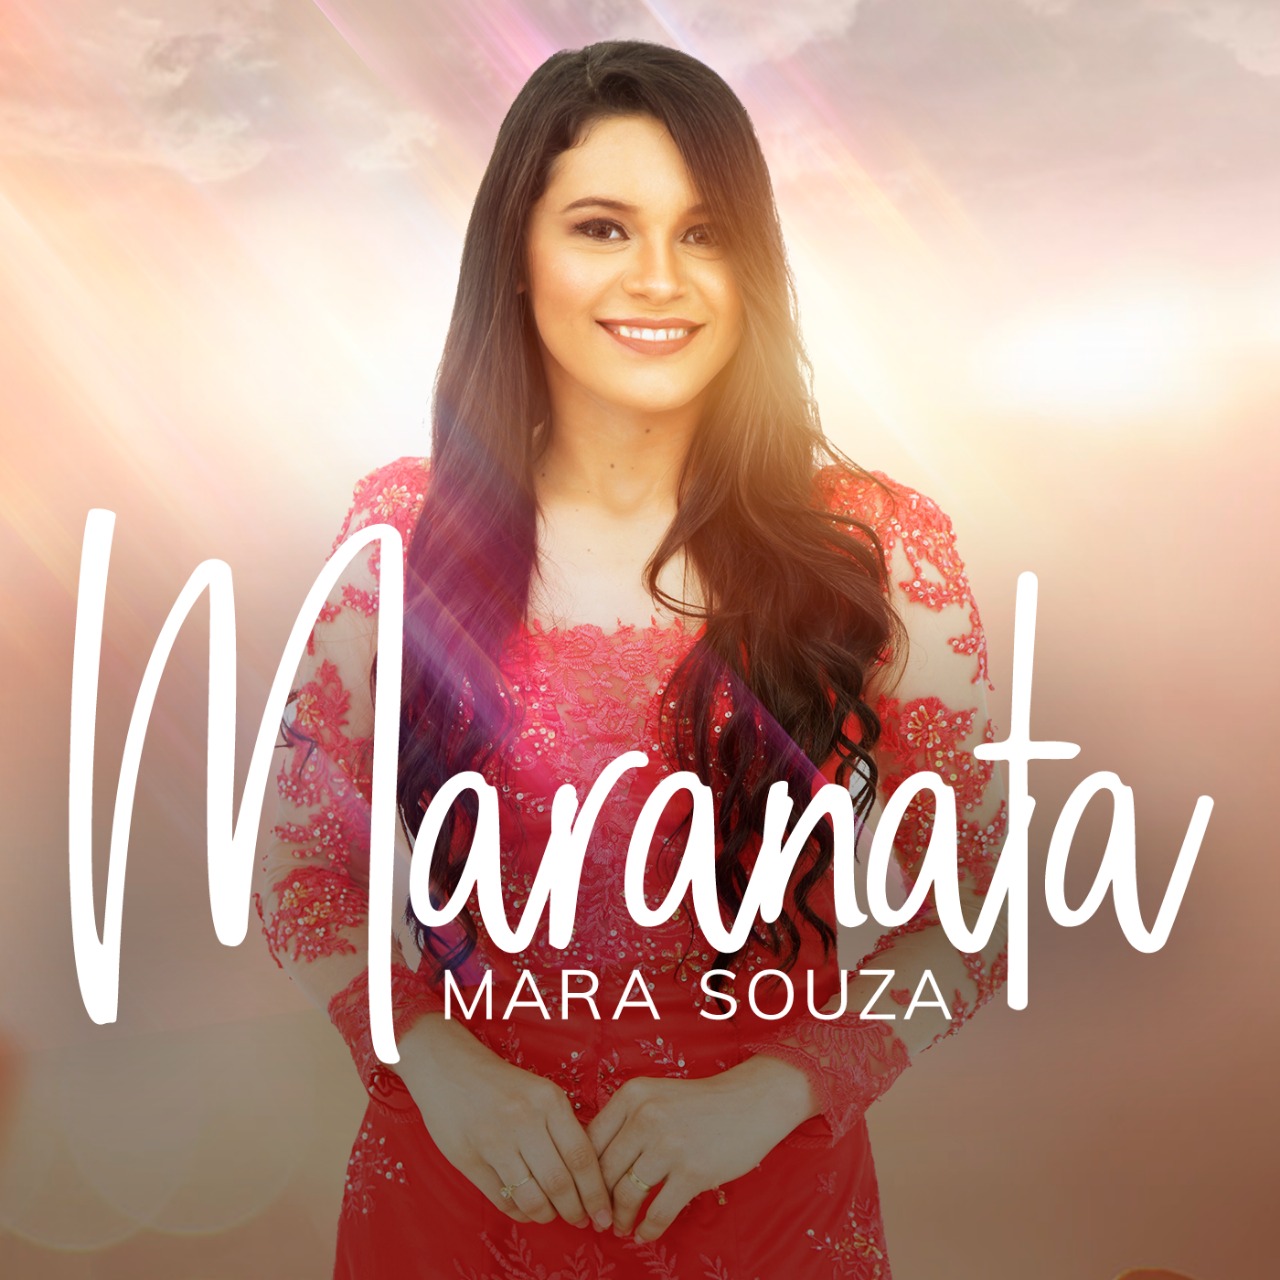 Mara Souza lança novo single “Maranata”, confira!